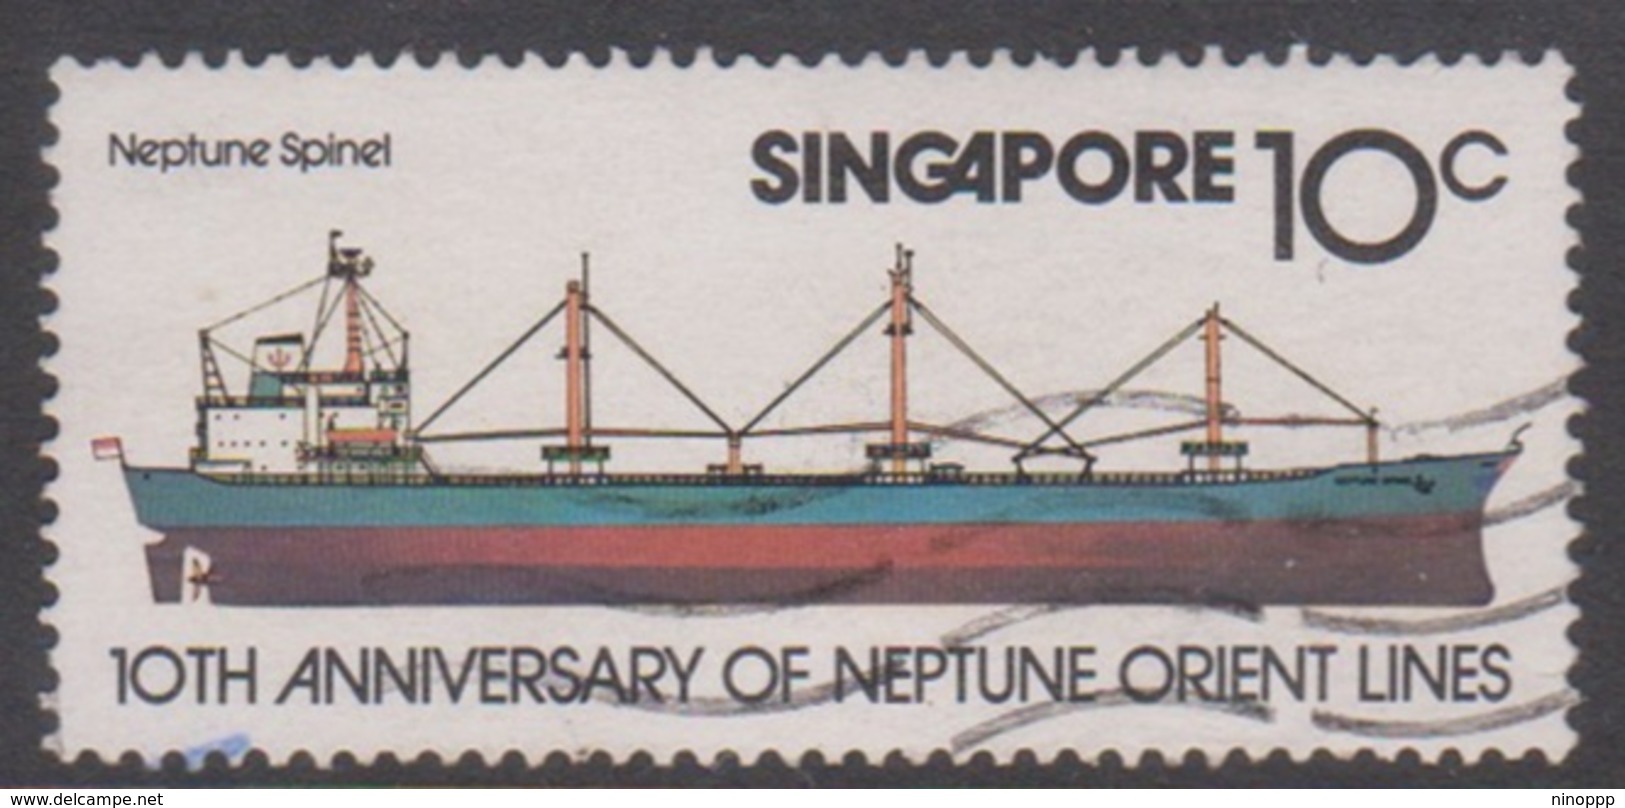 Singapore 339 1978 10th Anniversary Of Neptune Orient Line,10c Neptune Spinel, Used - Singapur (1959-...)